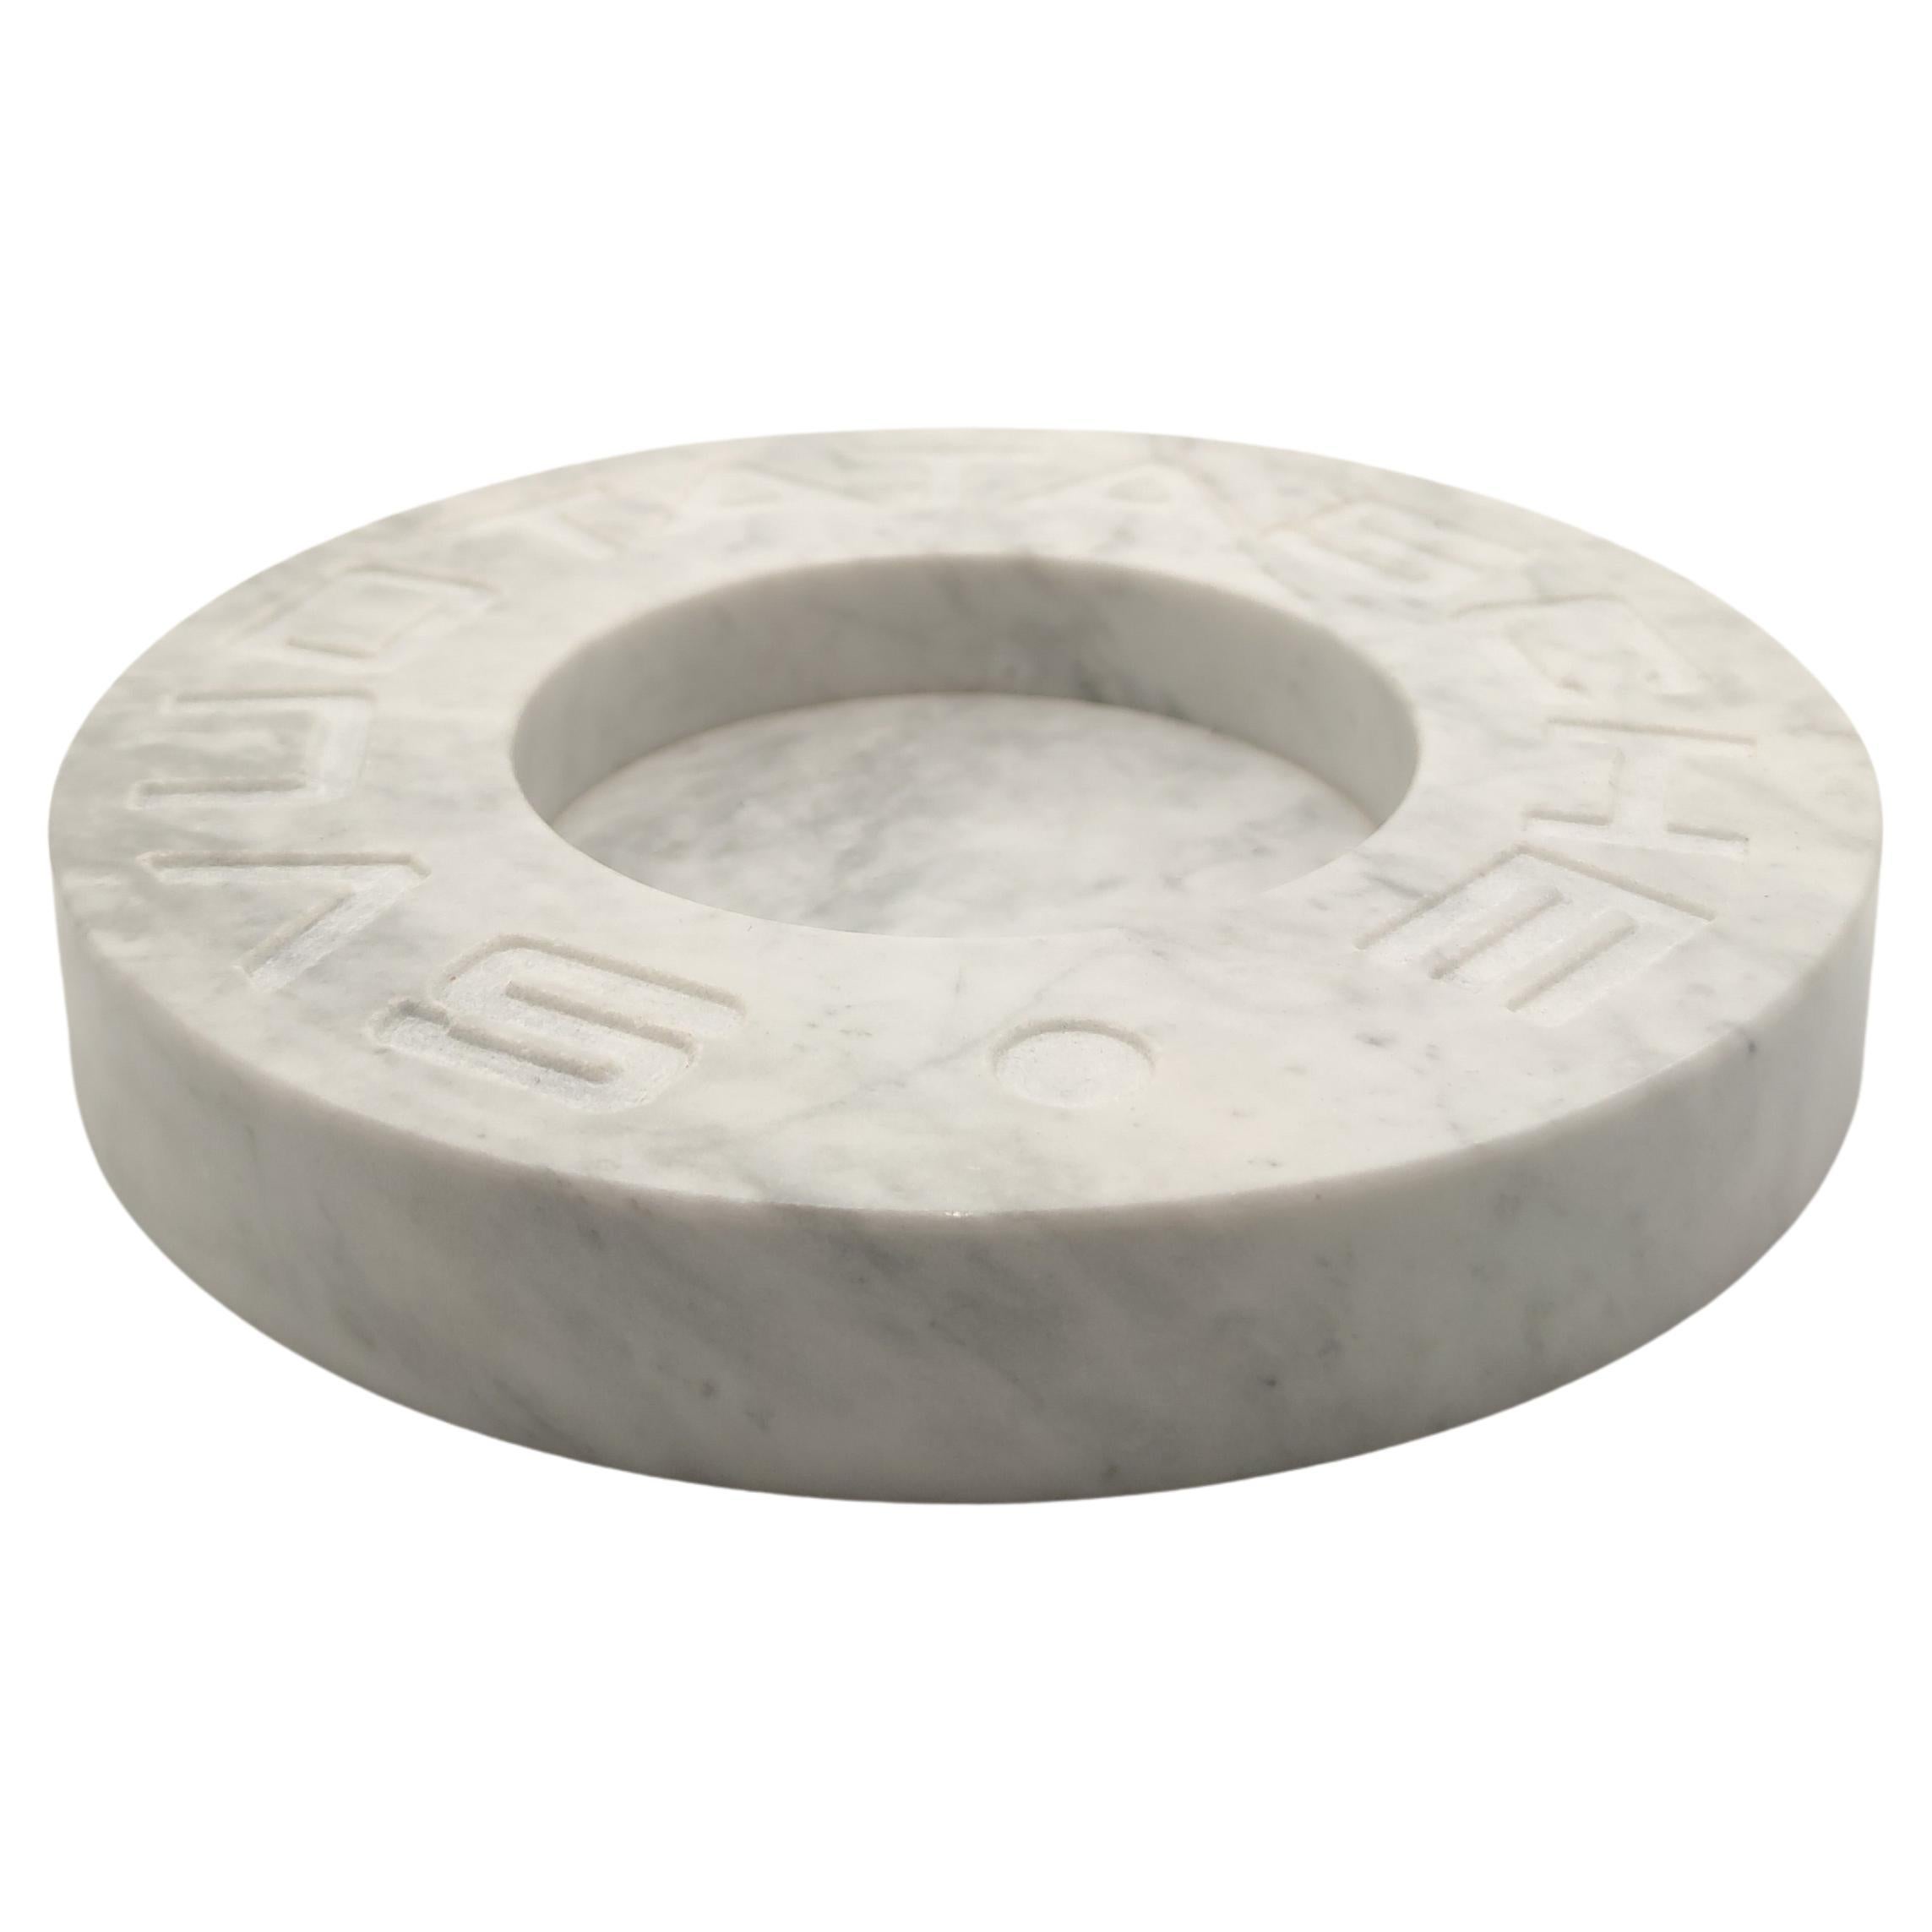 SVUOTATASCHE (Pocket Emptier) - Designed by Sfero Design 

The Carrara marble pocket emptier (